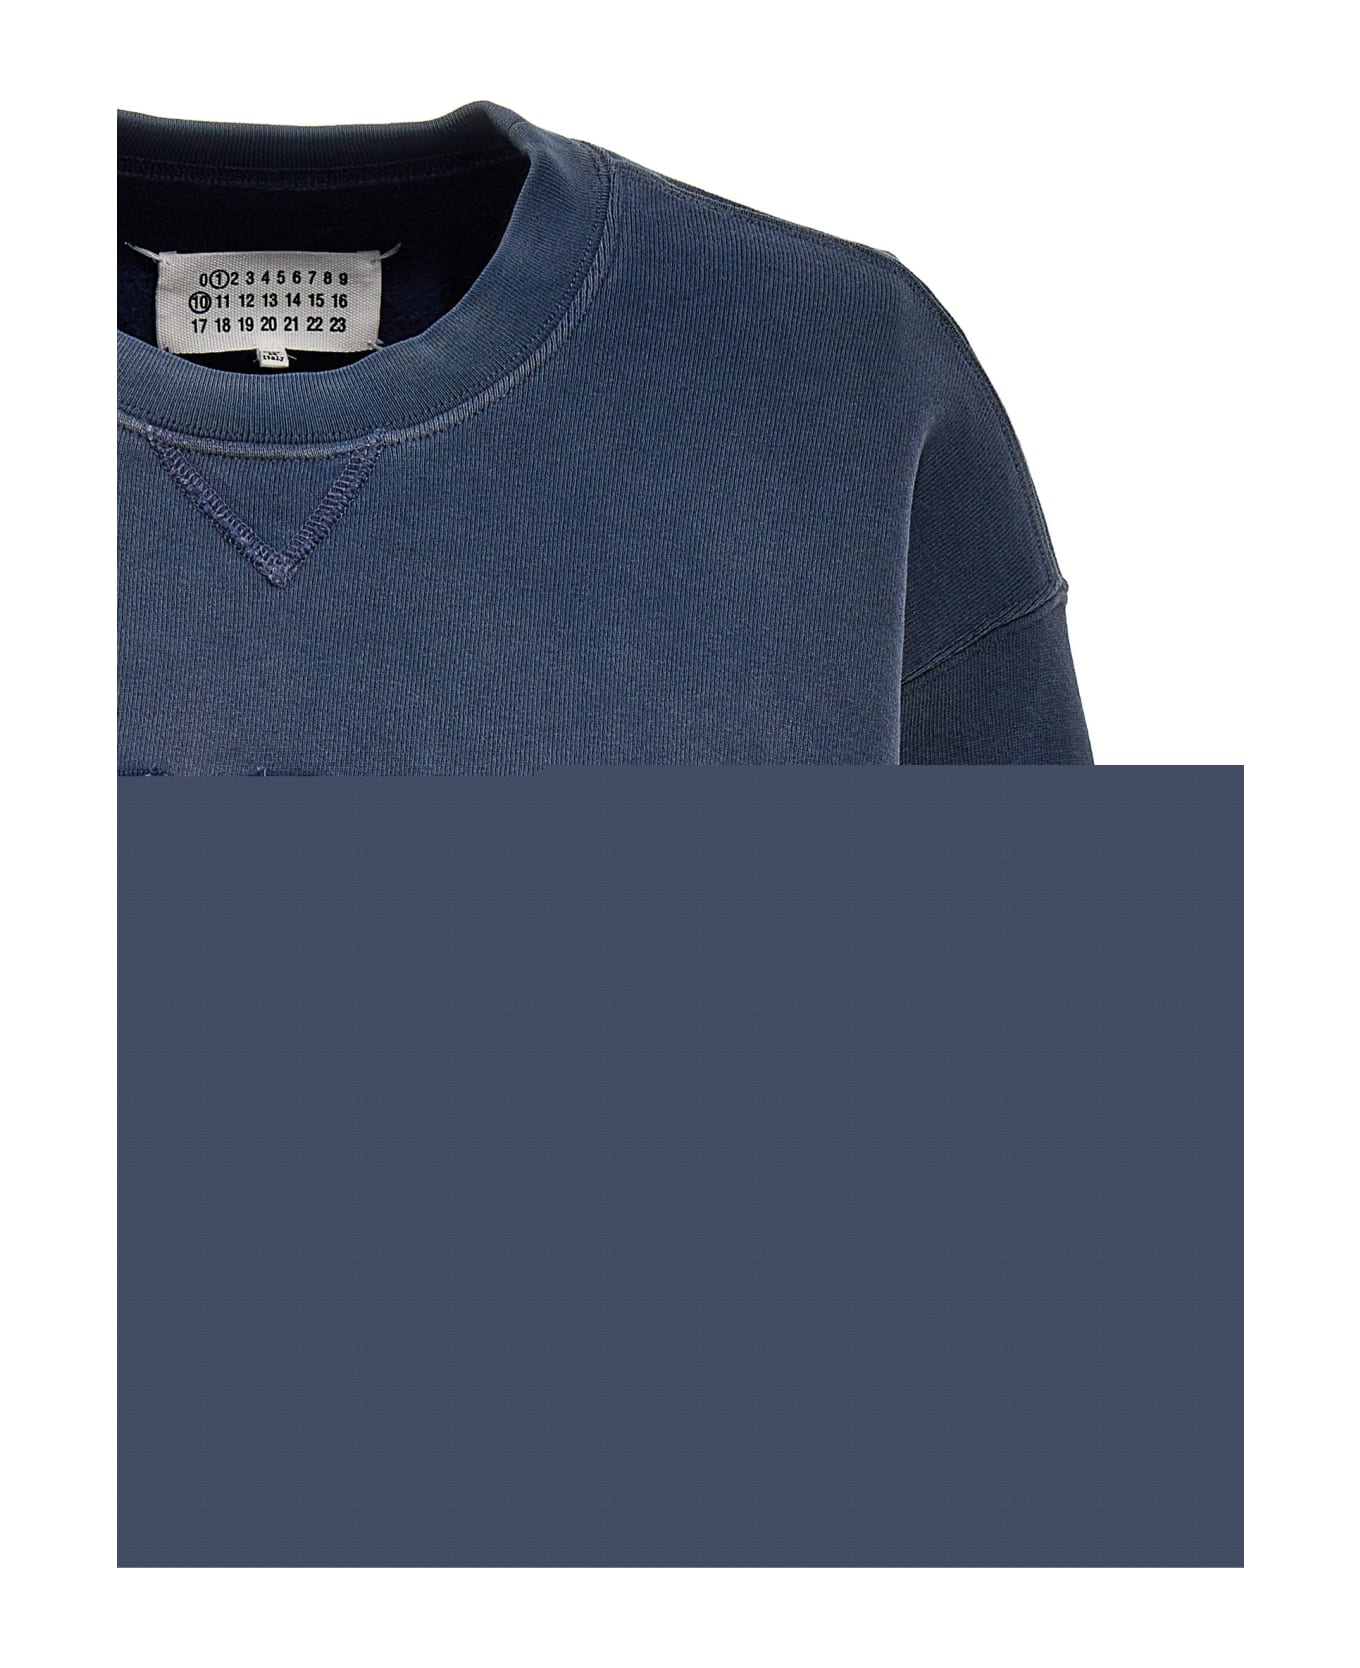 Maison Margiela Cropped Sweatshirt - BLU